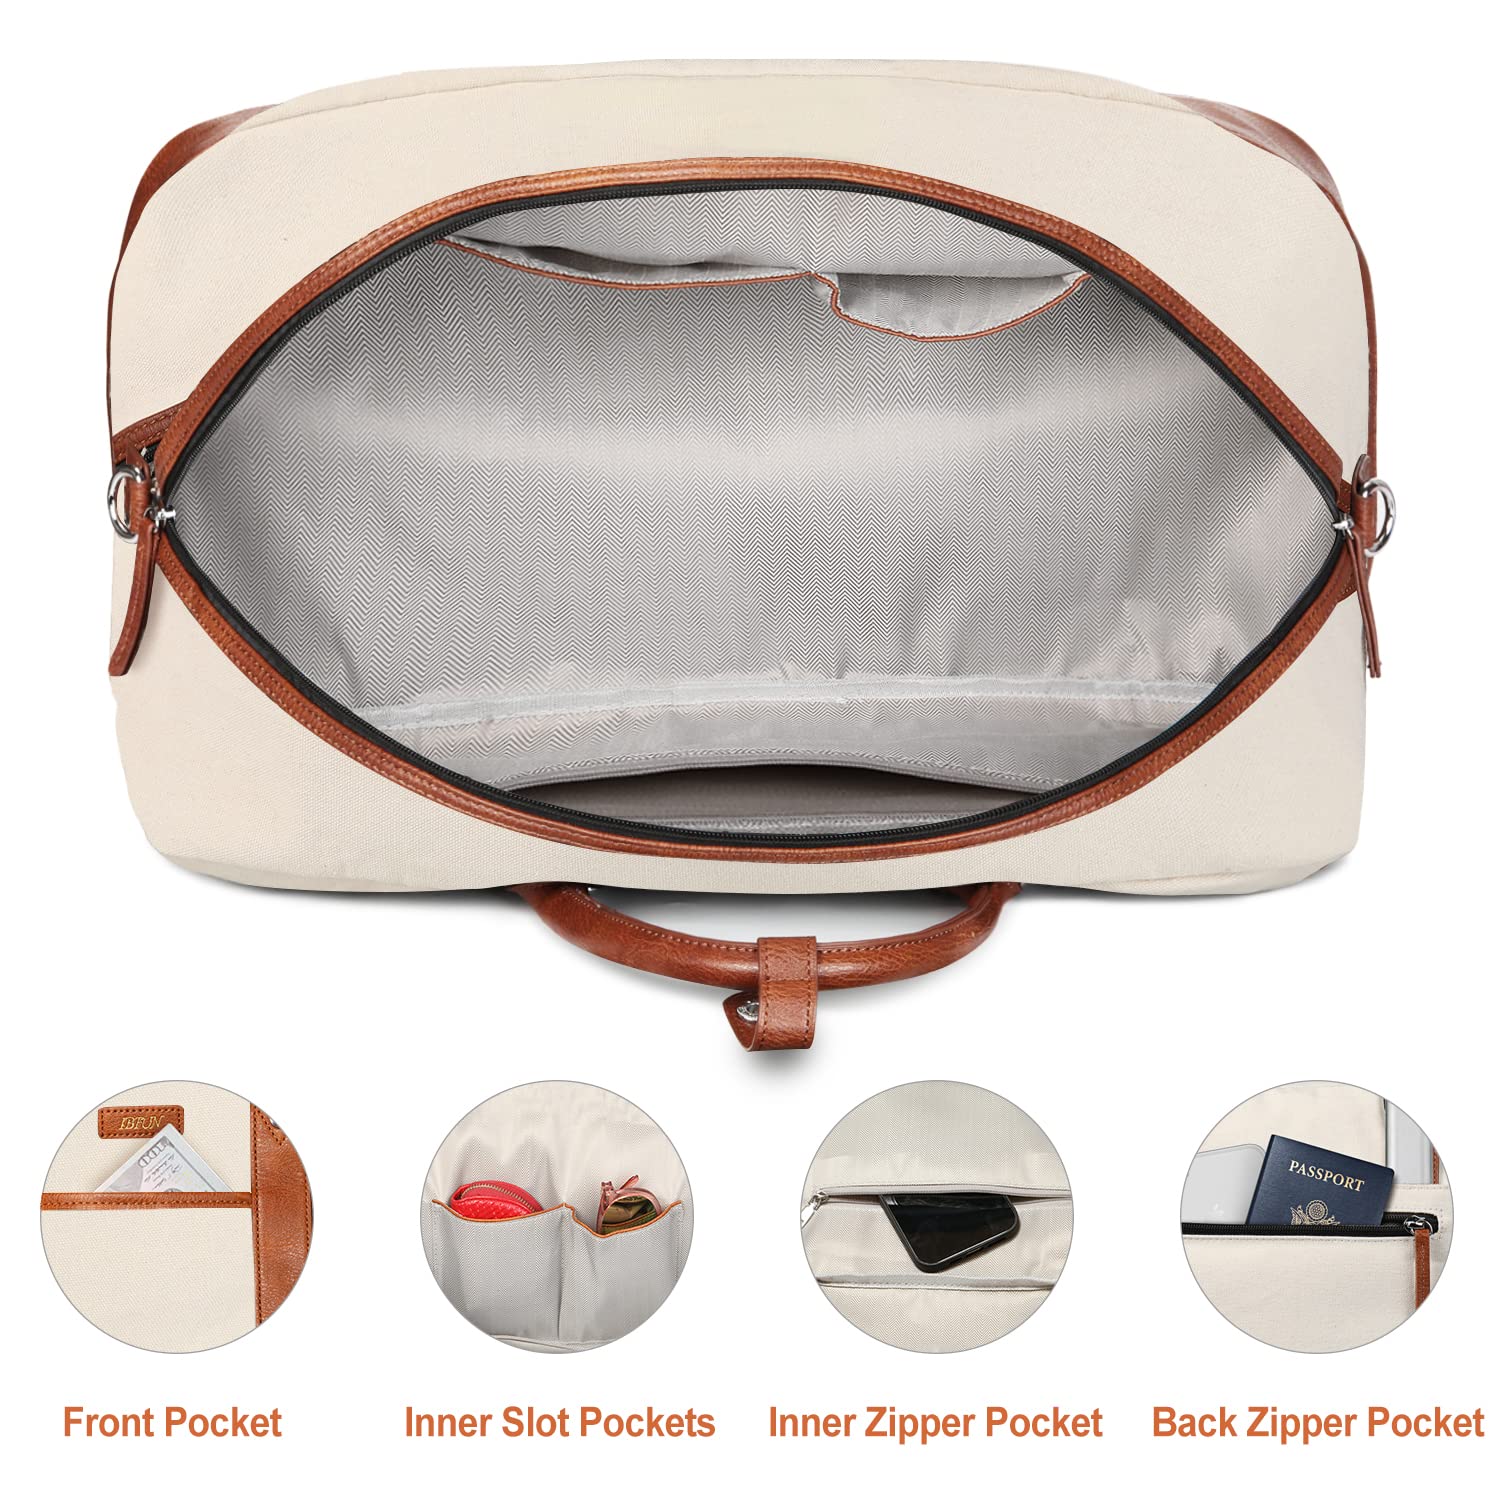 XB 20 inches Weekender Duffle Bag Large Travel Duffel Luggage Bag  Waterproof with Top Handle for Women Men